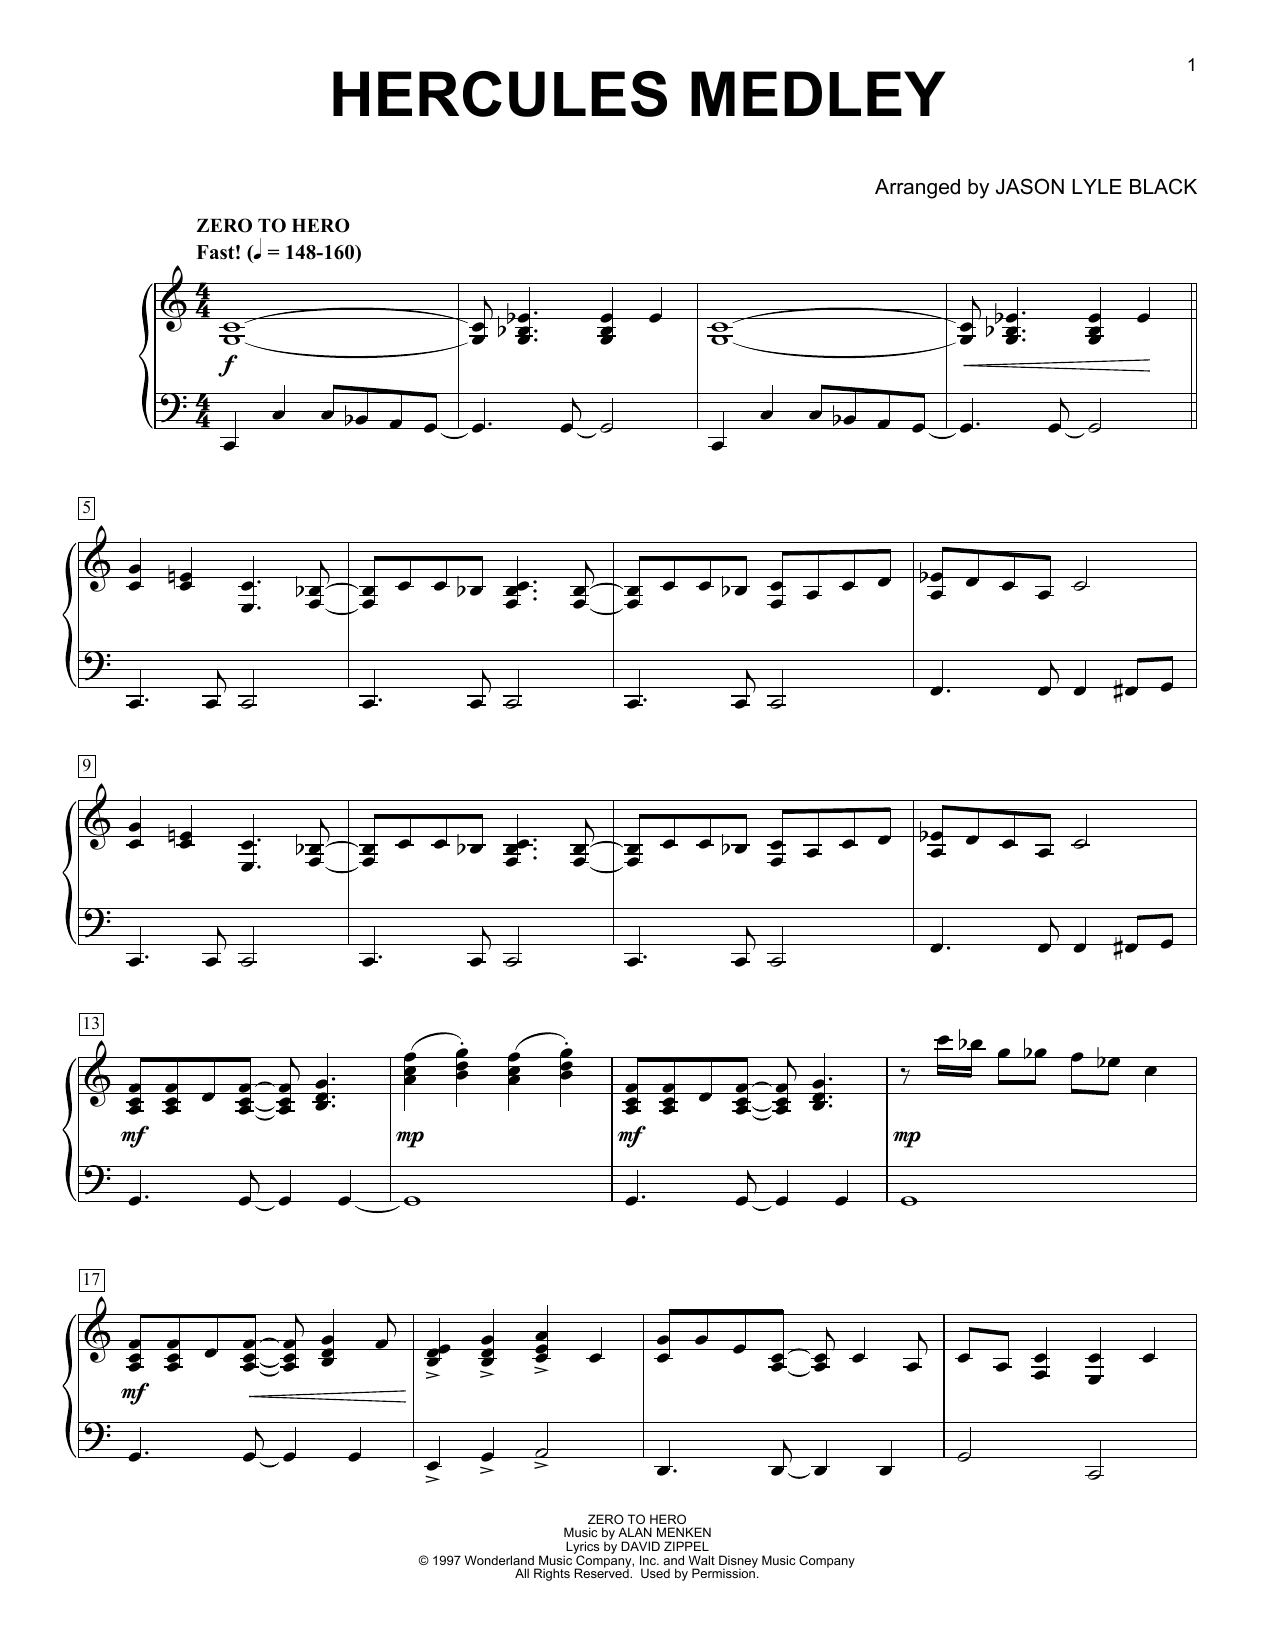 Alan Menken & David Zippel Hercules Medley (arr. Jason Lyle Black) Sheet Music Notes & Chords for Piano - Download or Print PDF